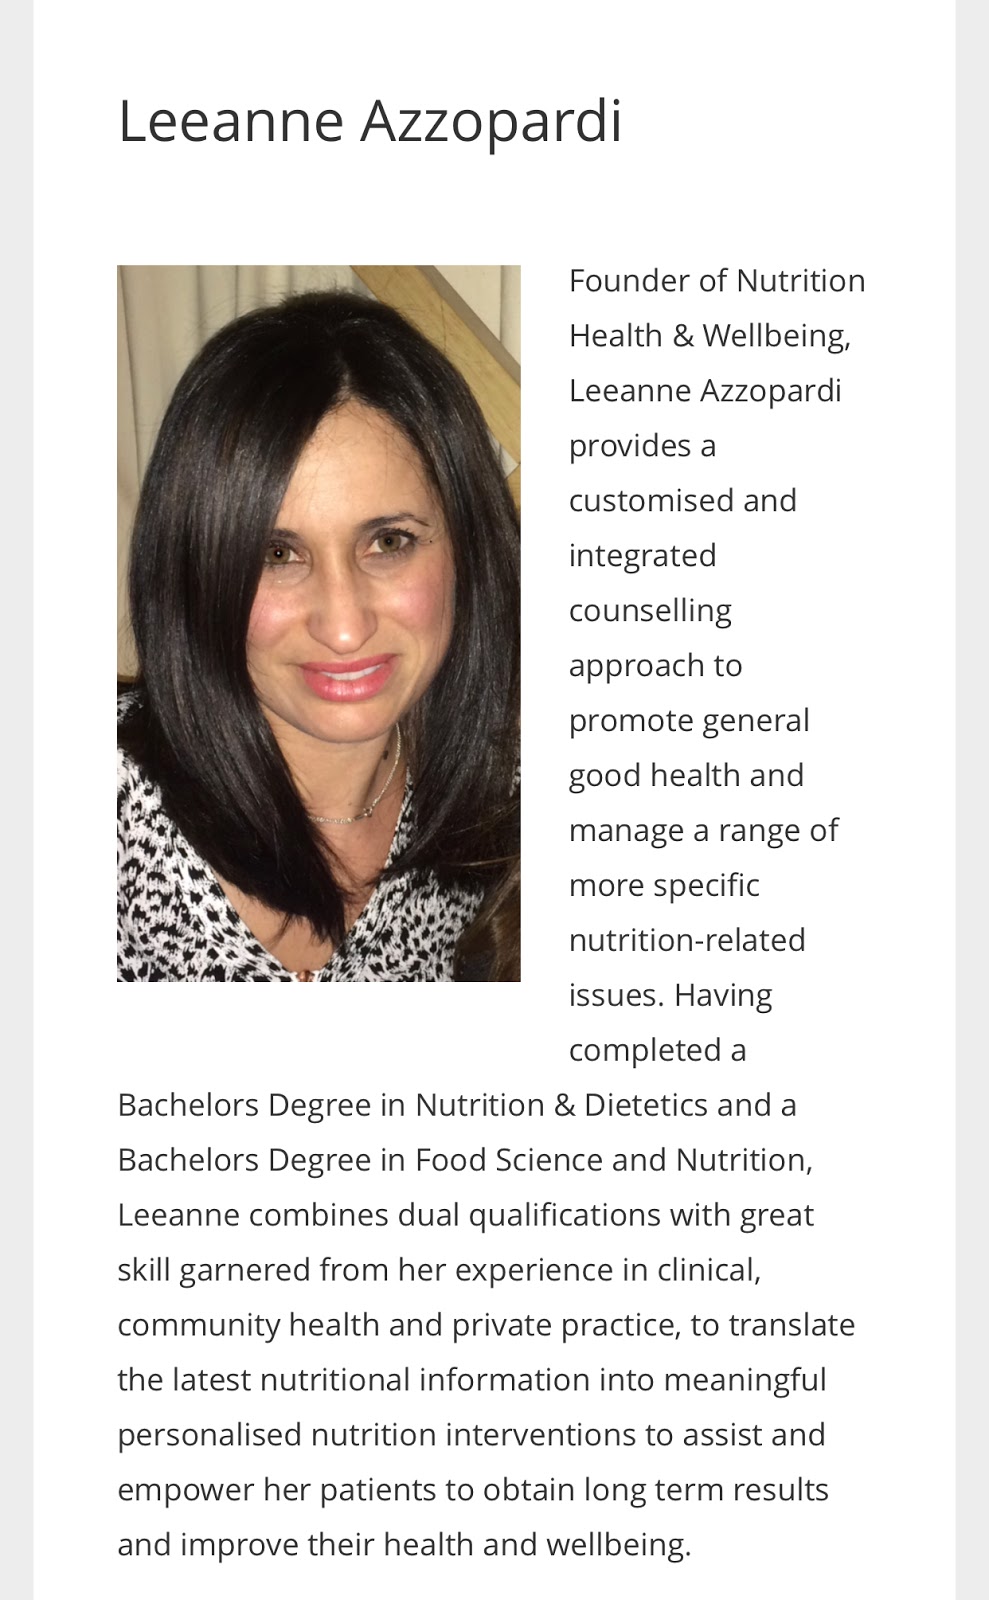 Nutrition Health & Wellbeing | 46 Gap Rd, Sunbury VIC 3429, Australia | Phone: 1800 313 800